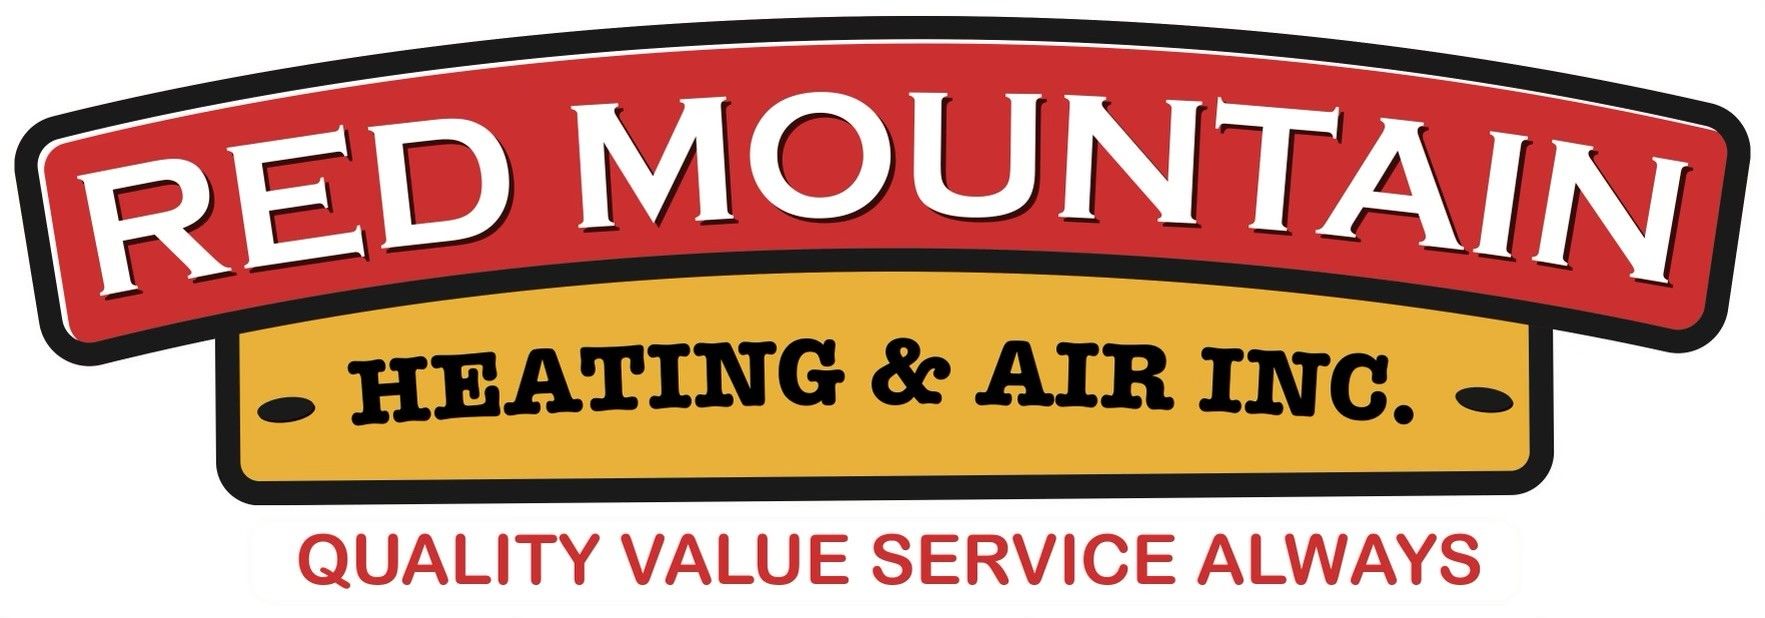 Red Mountain Heating & Air, Inc.